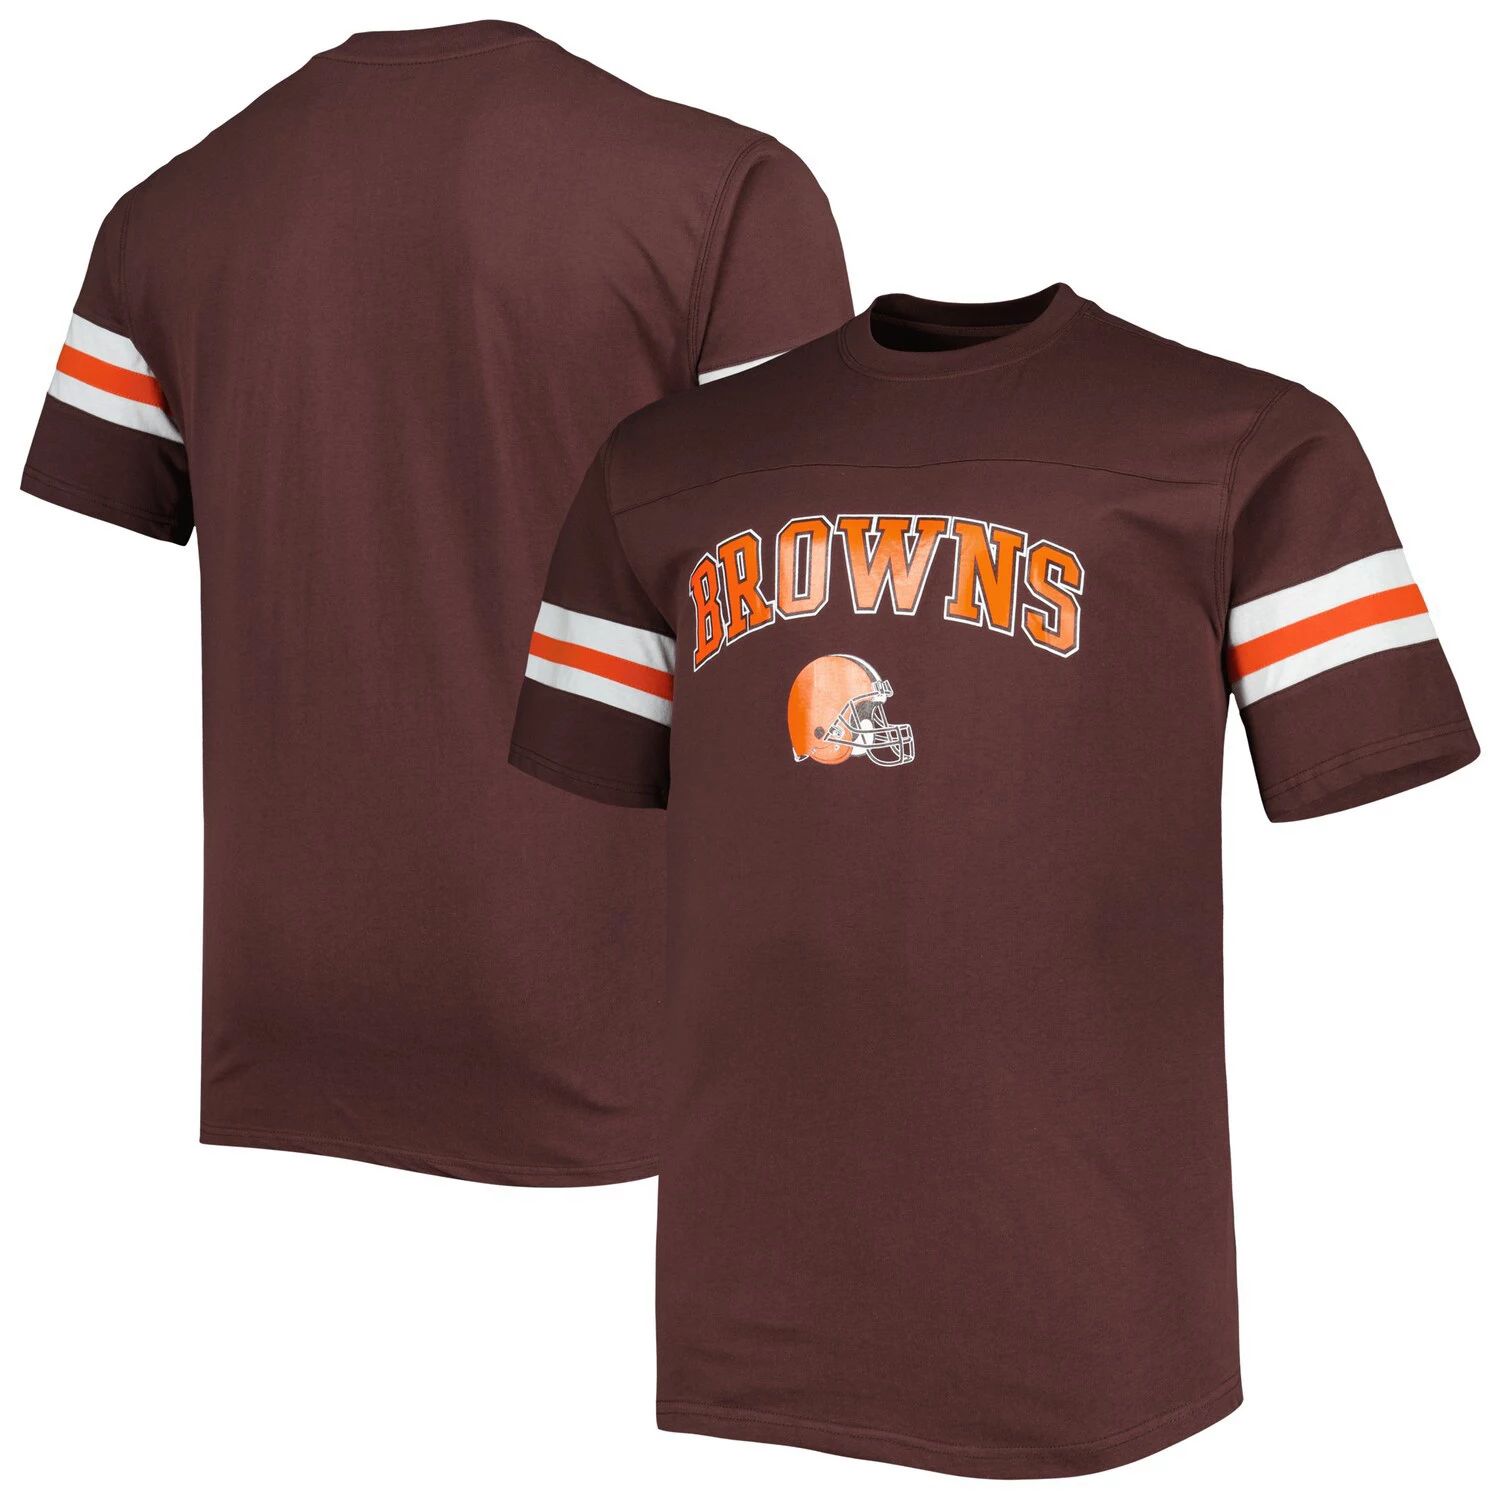 Мужская коричневая футболка с полосками на рукавах Cleveland Browns